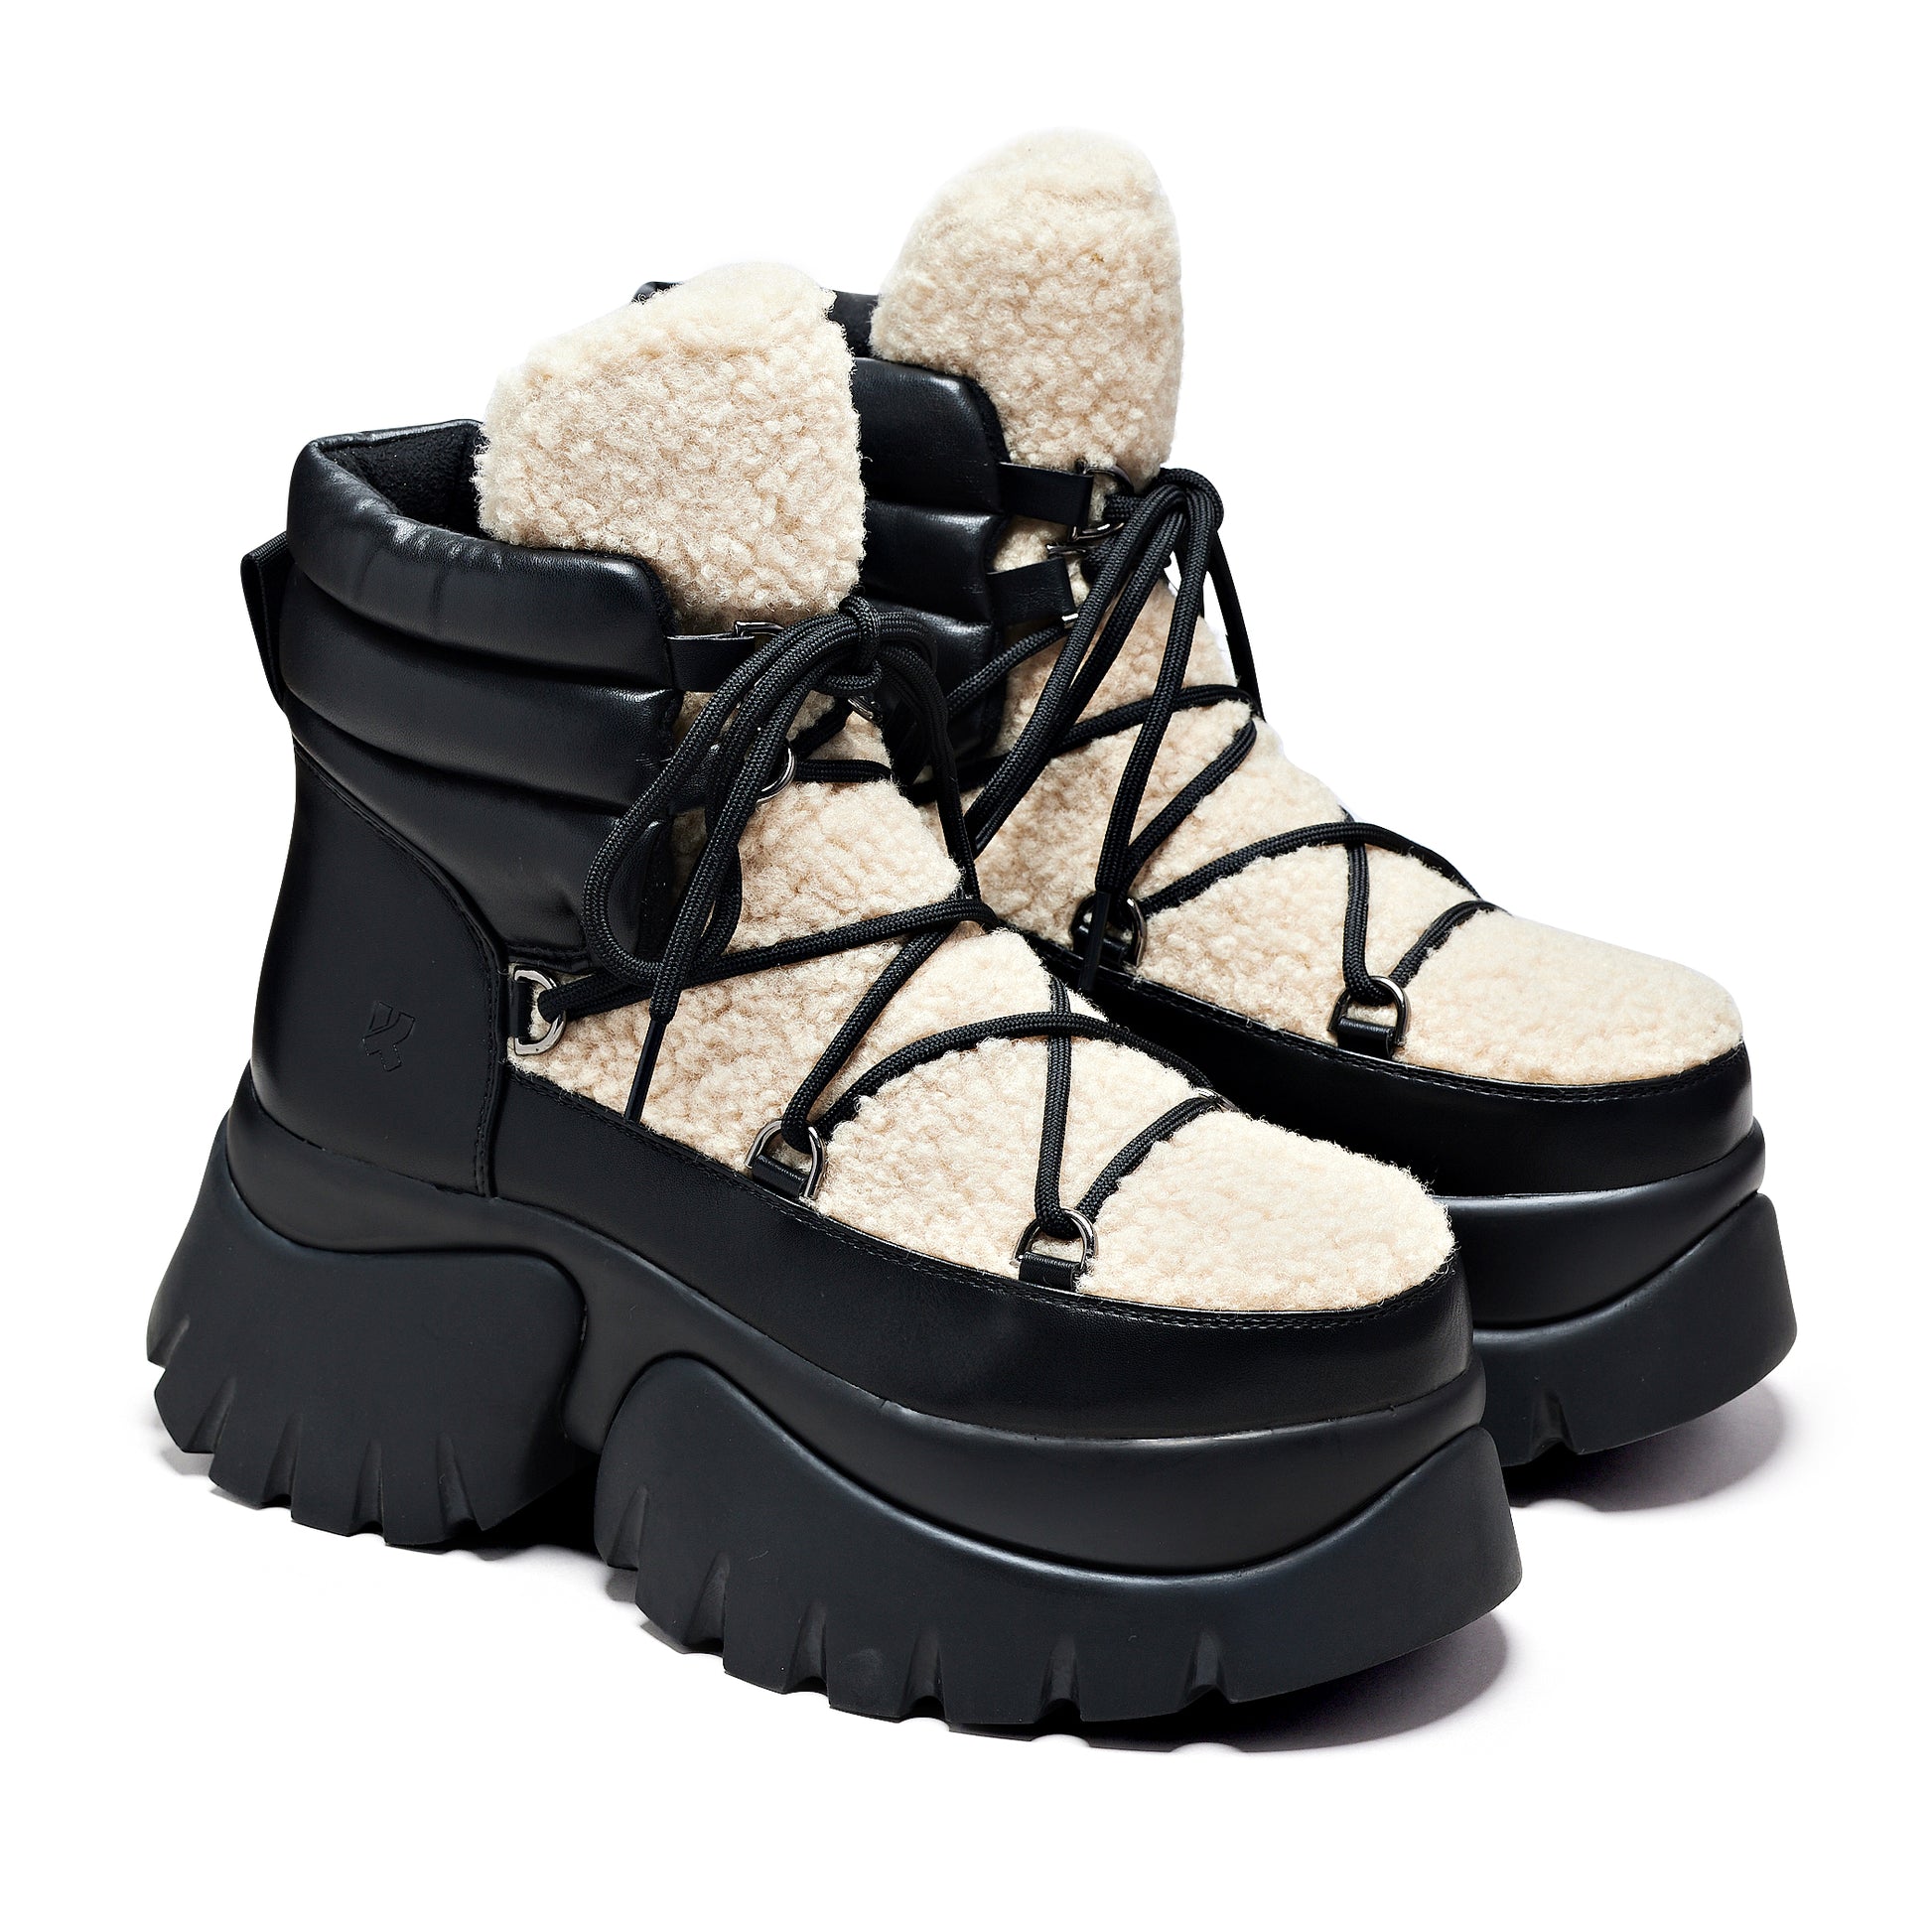 Cream Fluffy Vilun Winter Boots - Ankle Boots - KOI Footwear - Cream - Three-Quarter View